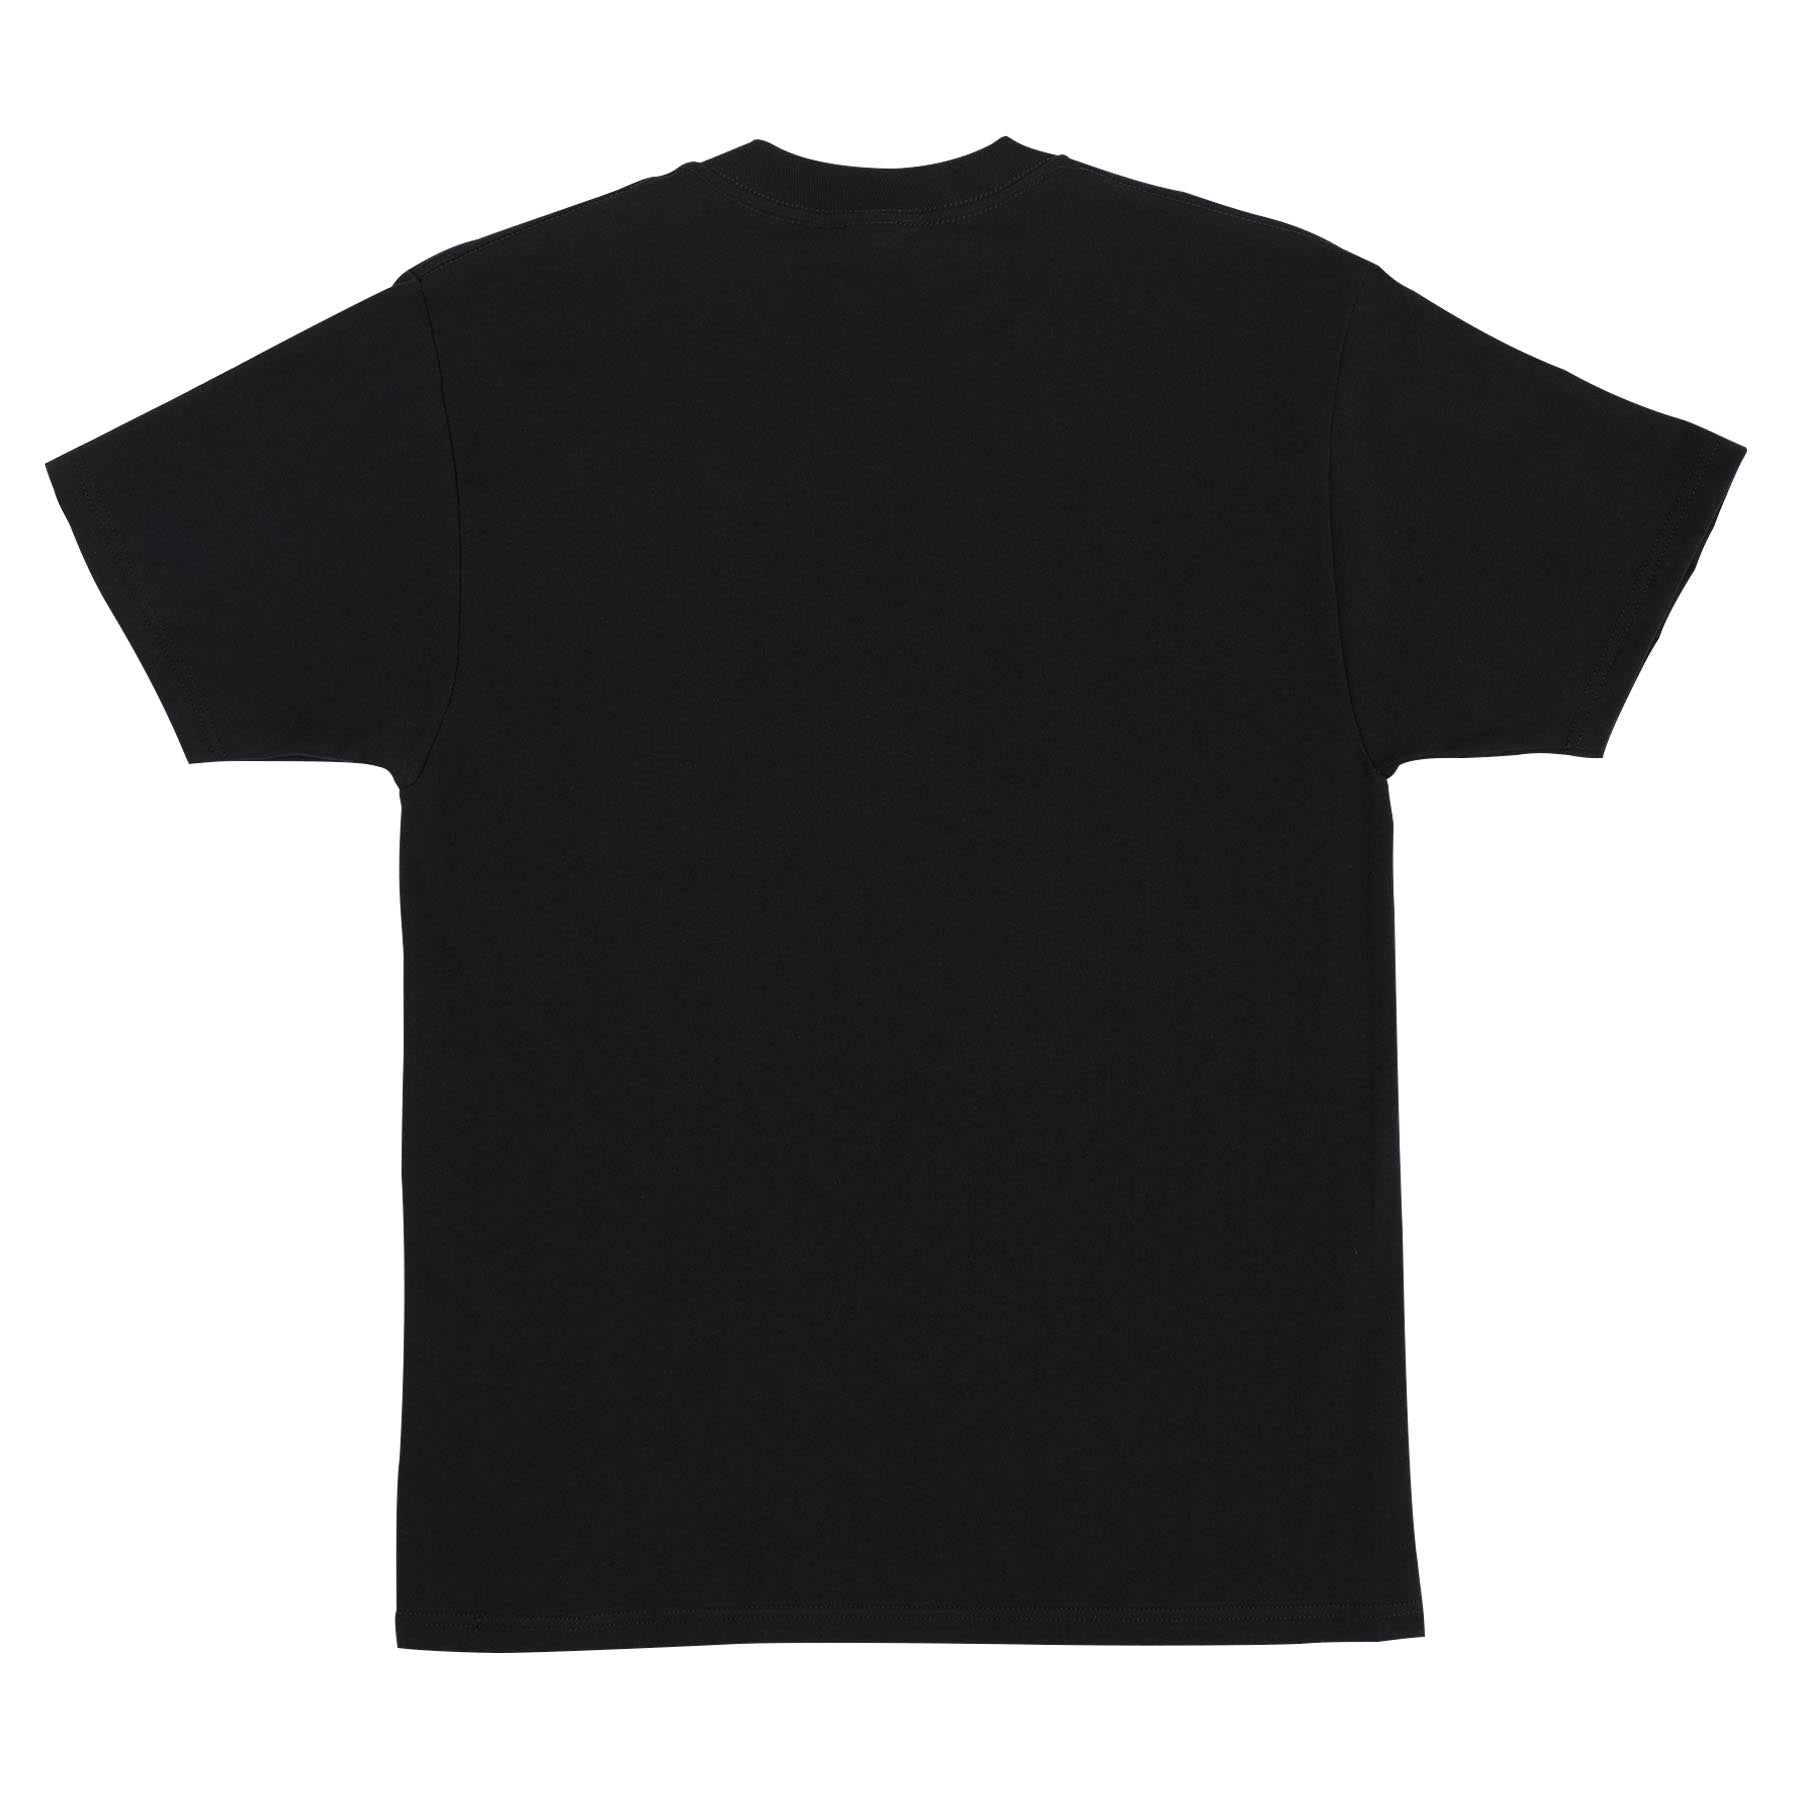 Santa Cruz X Thrasher O&#39;Brien Reaper S/S T-Shirt - Black